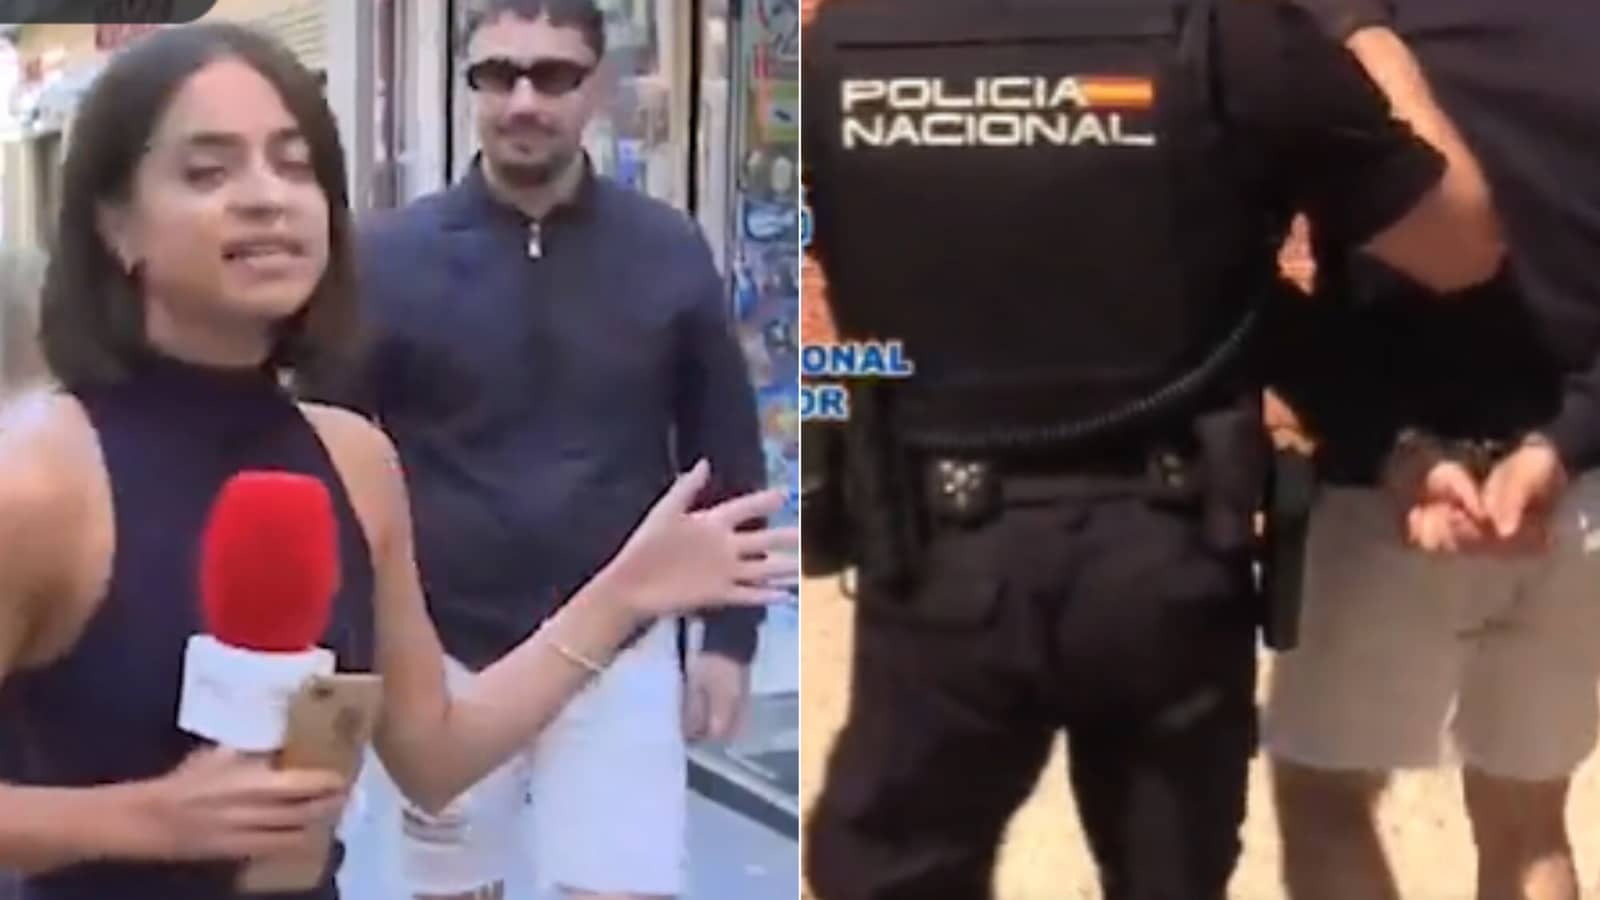 Man gropes reporter on live TV in Spain, gets arrested